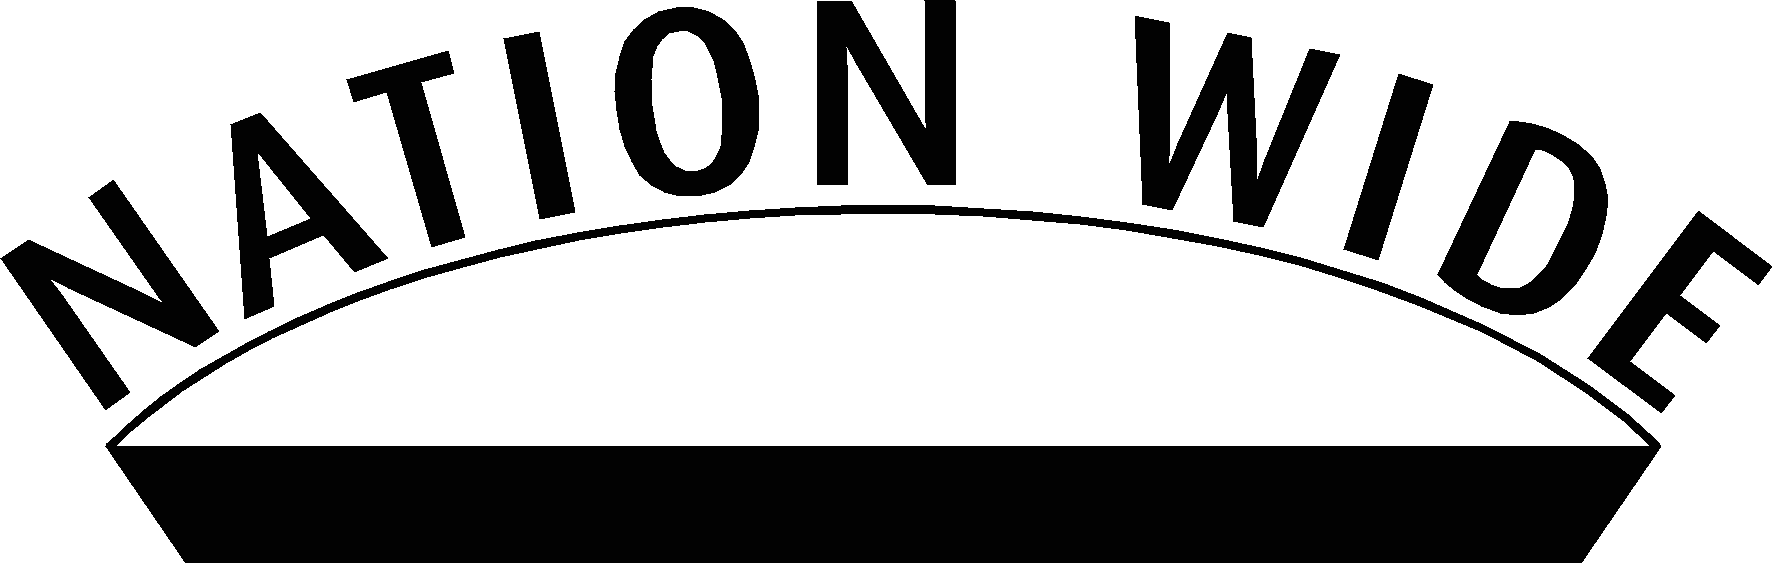 NationWide logo